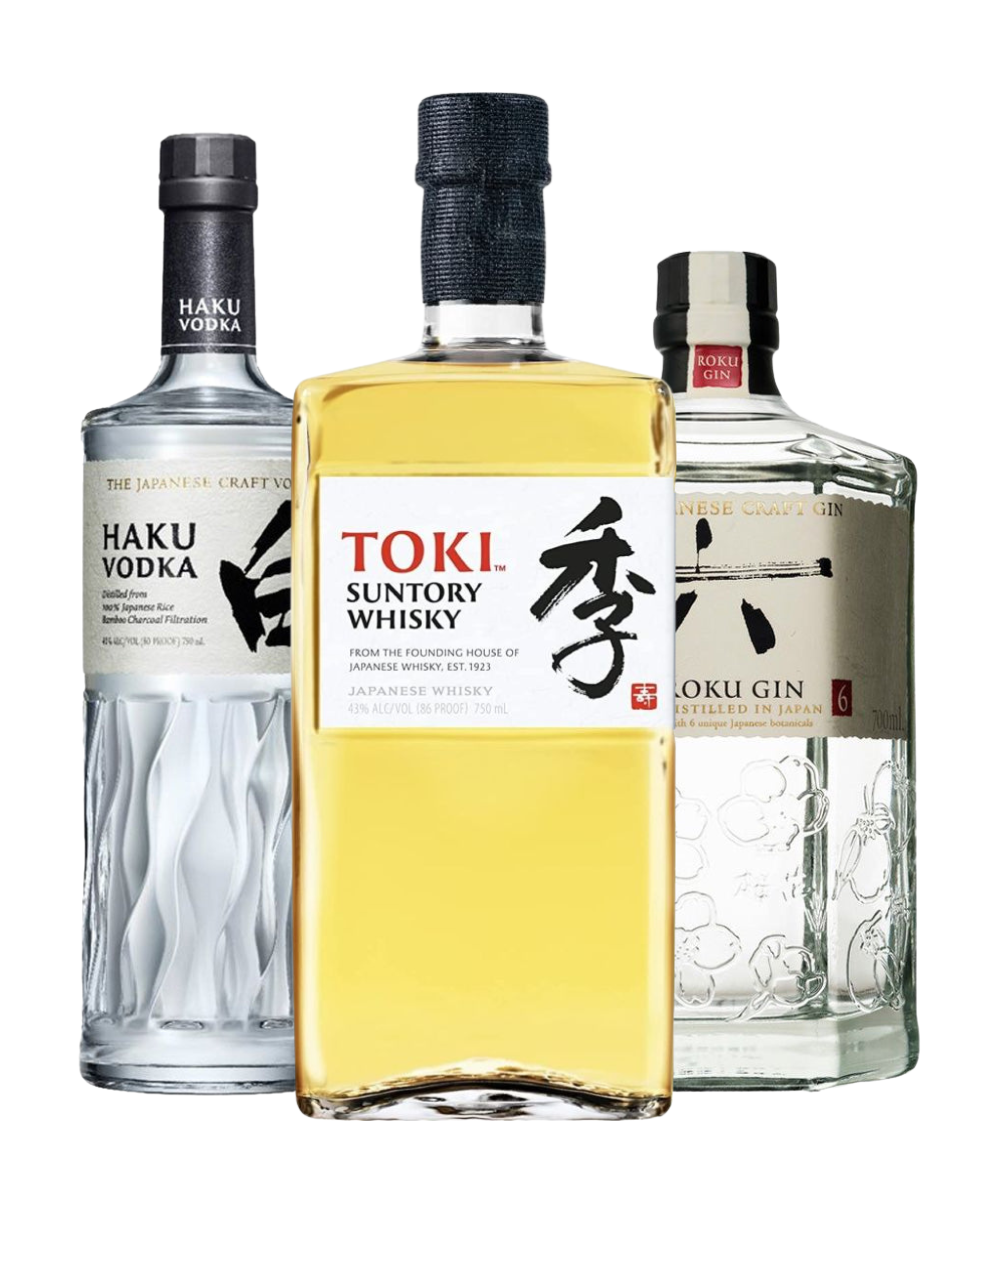 Suntory Whisky Toki with Haku Vodka and Roku Gin